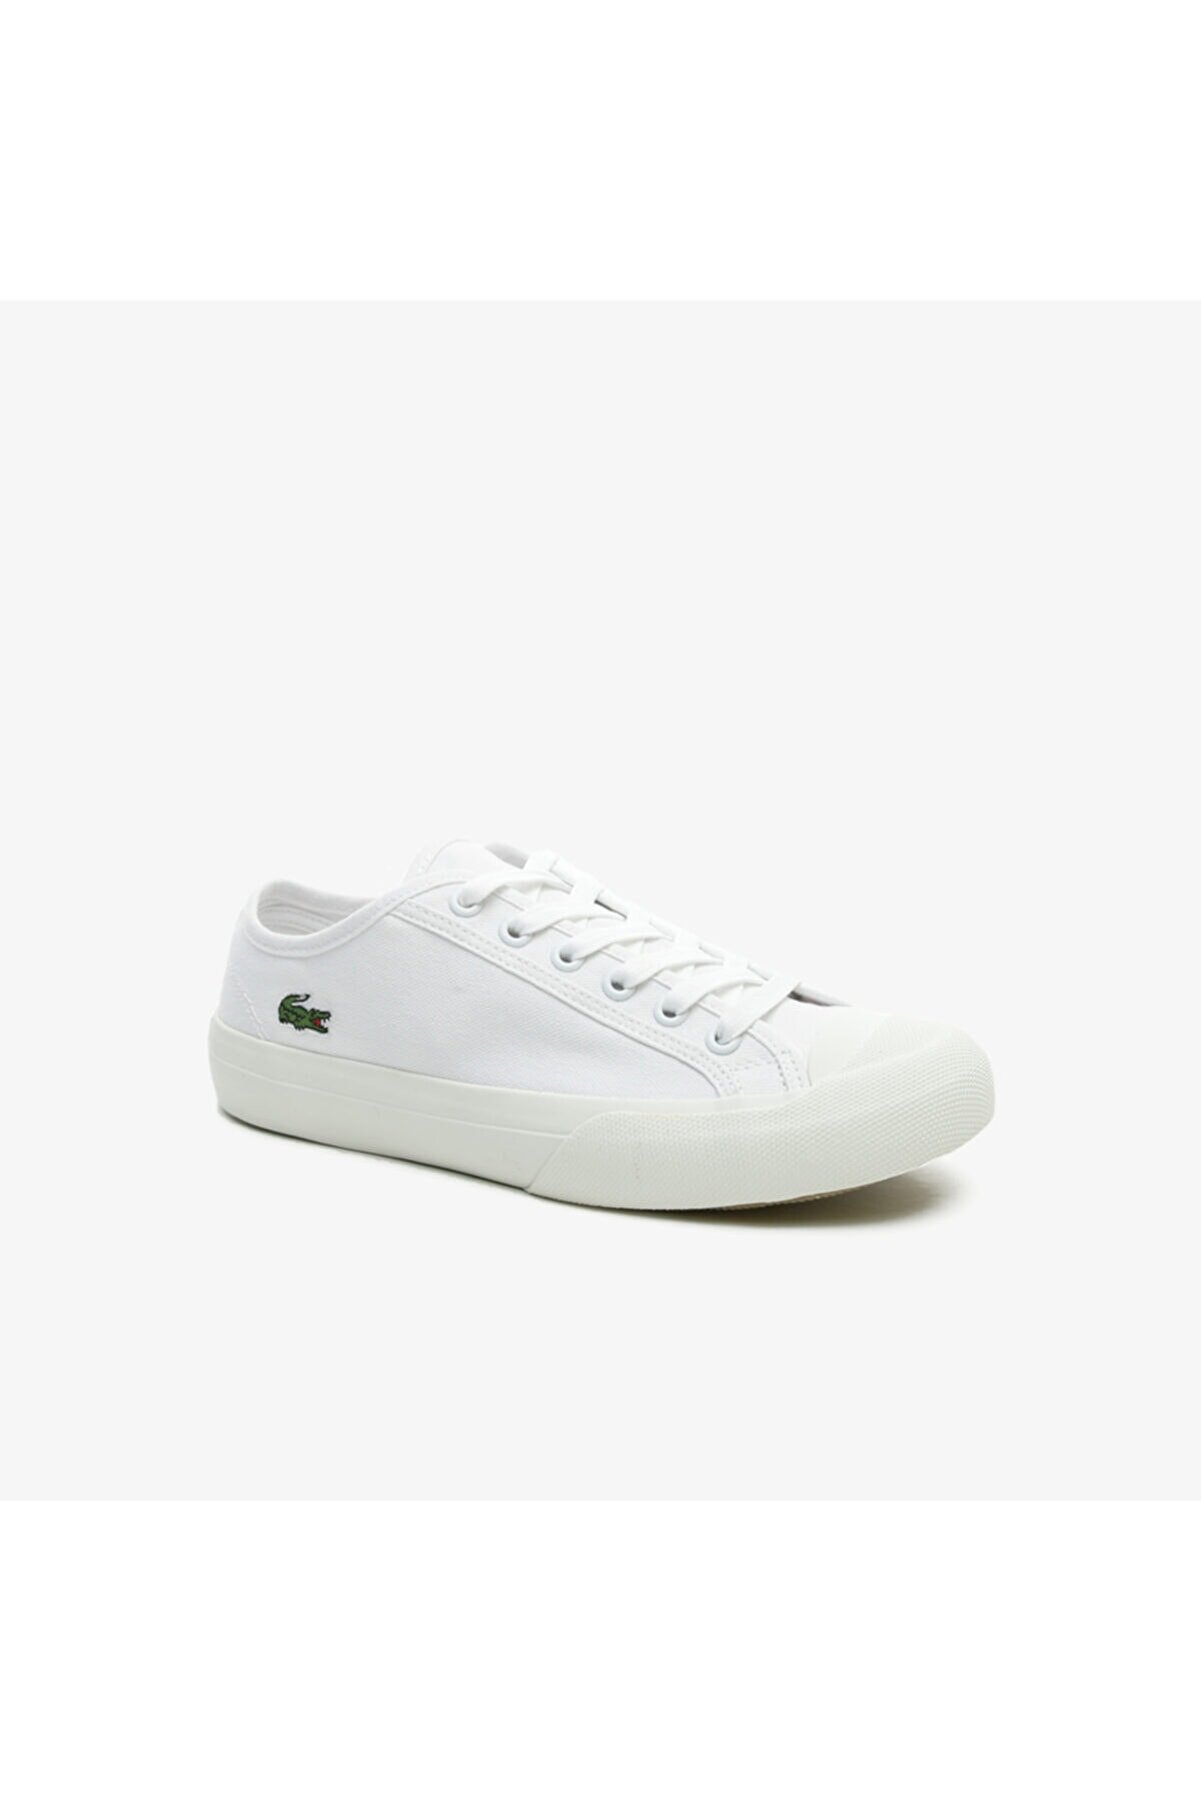 Lacoste Topskill 0721 2 Cfa Kadın Beyaz Sneaker